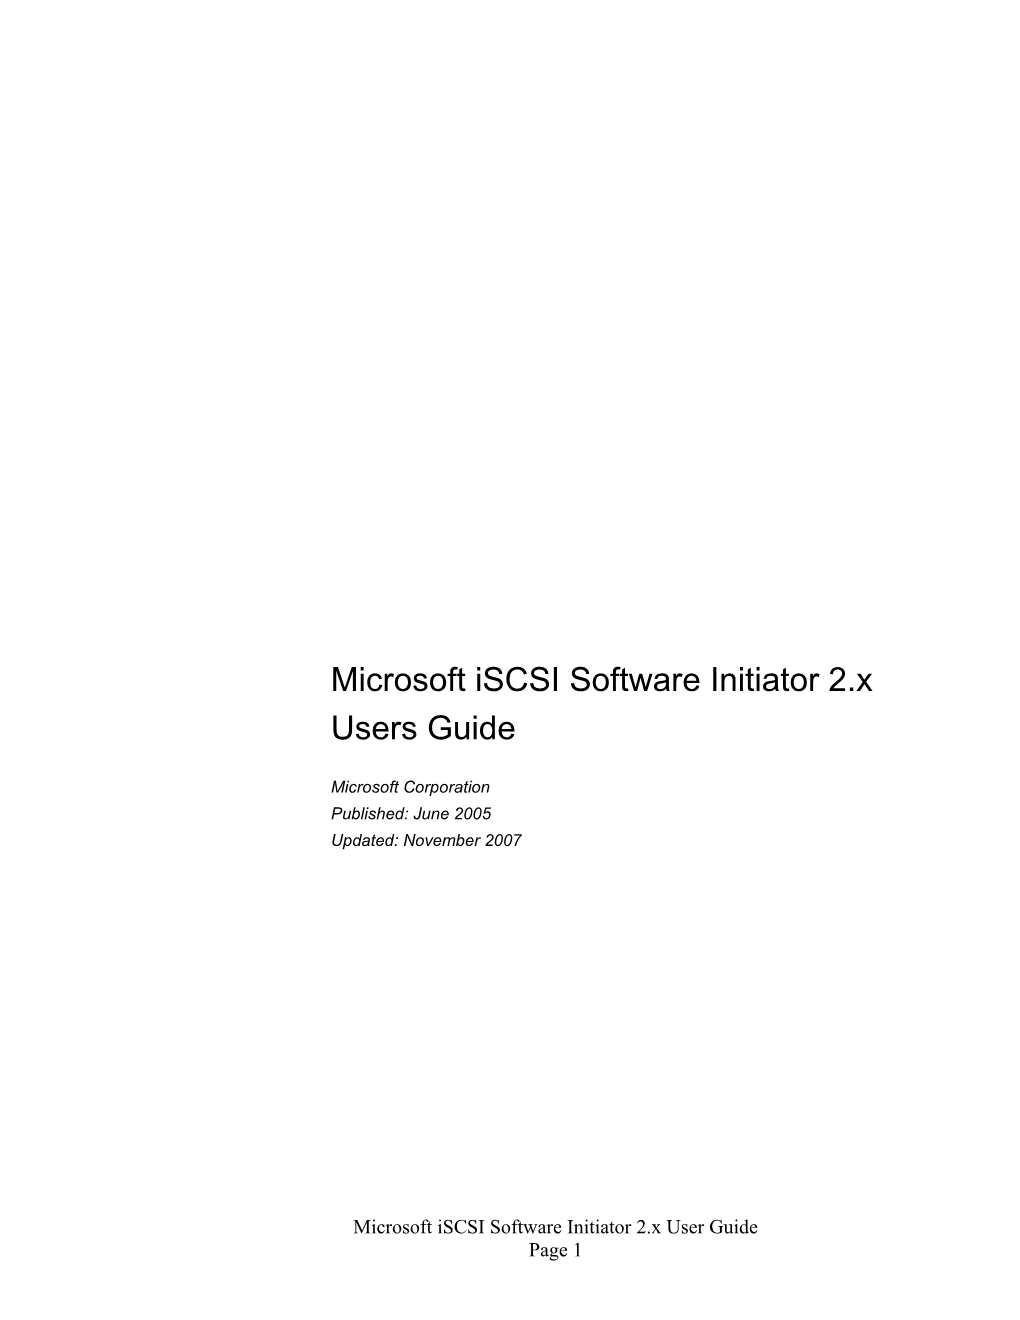 Microsoft Iscsi Software Initiator User's Guide 2.X